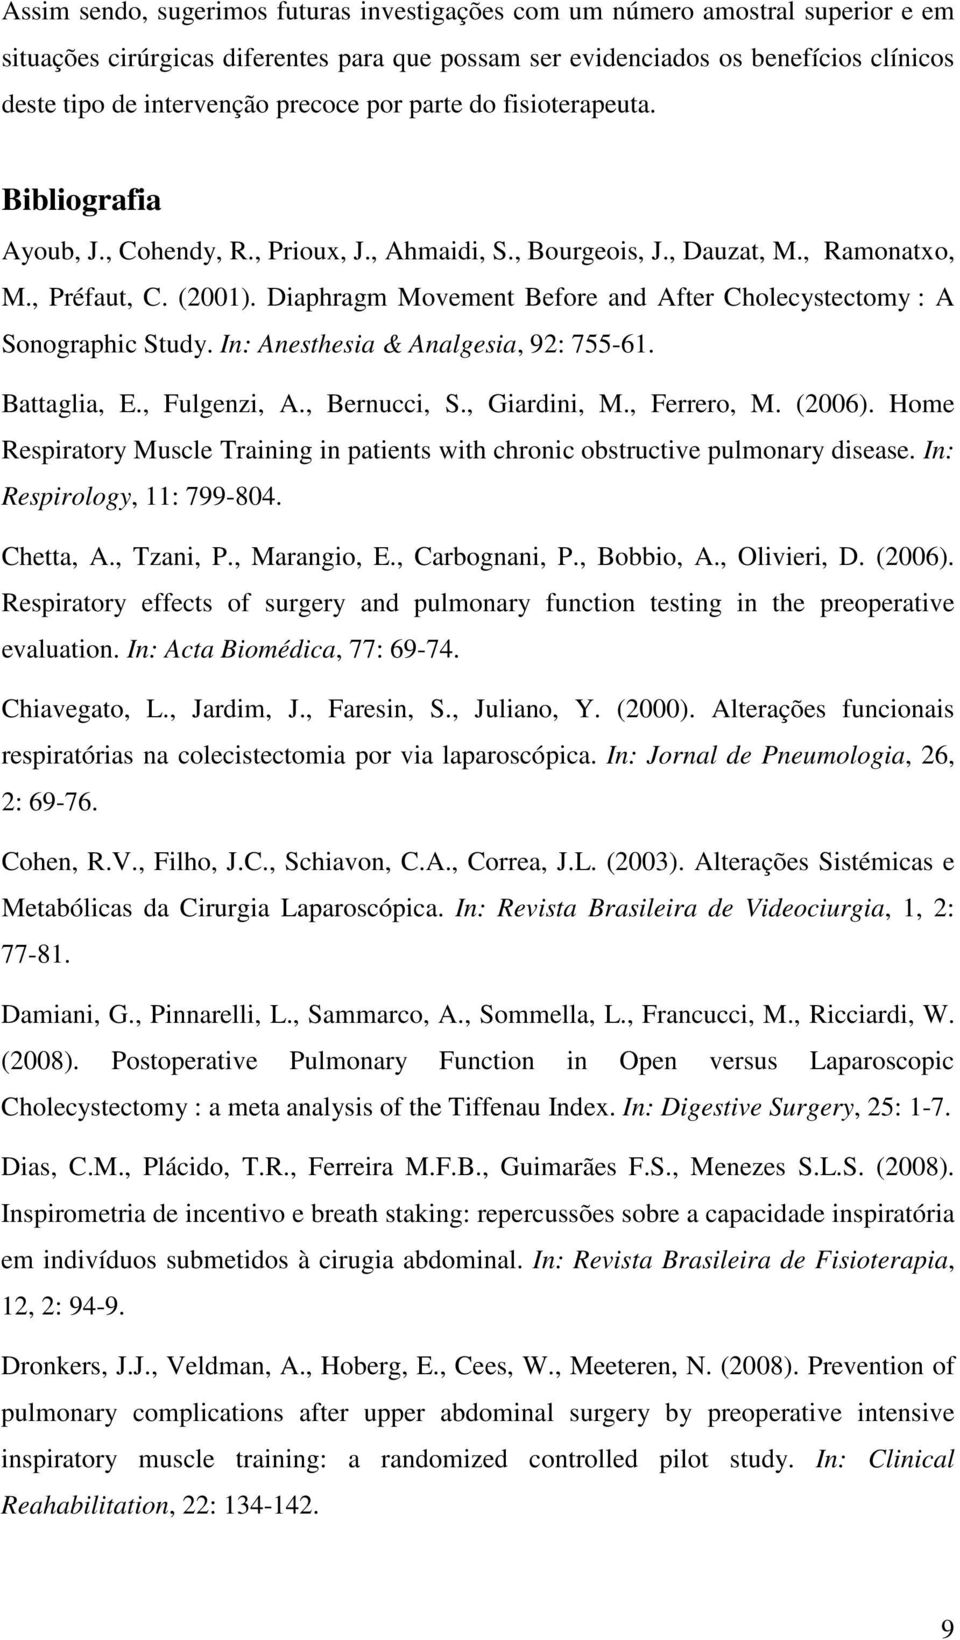 Diaphragm Movement Before and After Cholecystectomy : A Sonographic Study. In: Anesthesia & Analgesia, 9: 755-6. Battaglia, E., Fulgenzi, A., Bernucci, S., Giardini, M., Ferrero, M. (6).